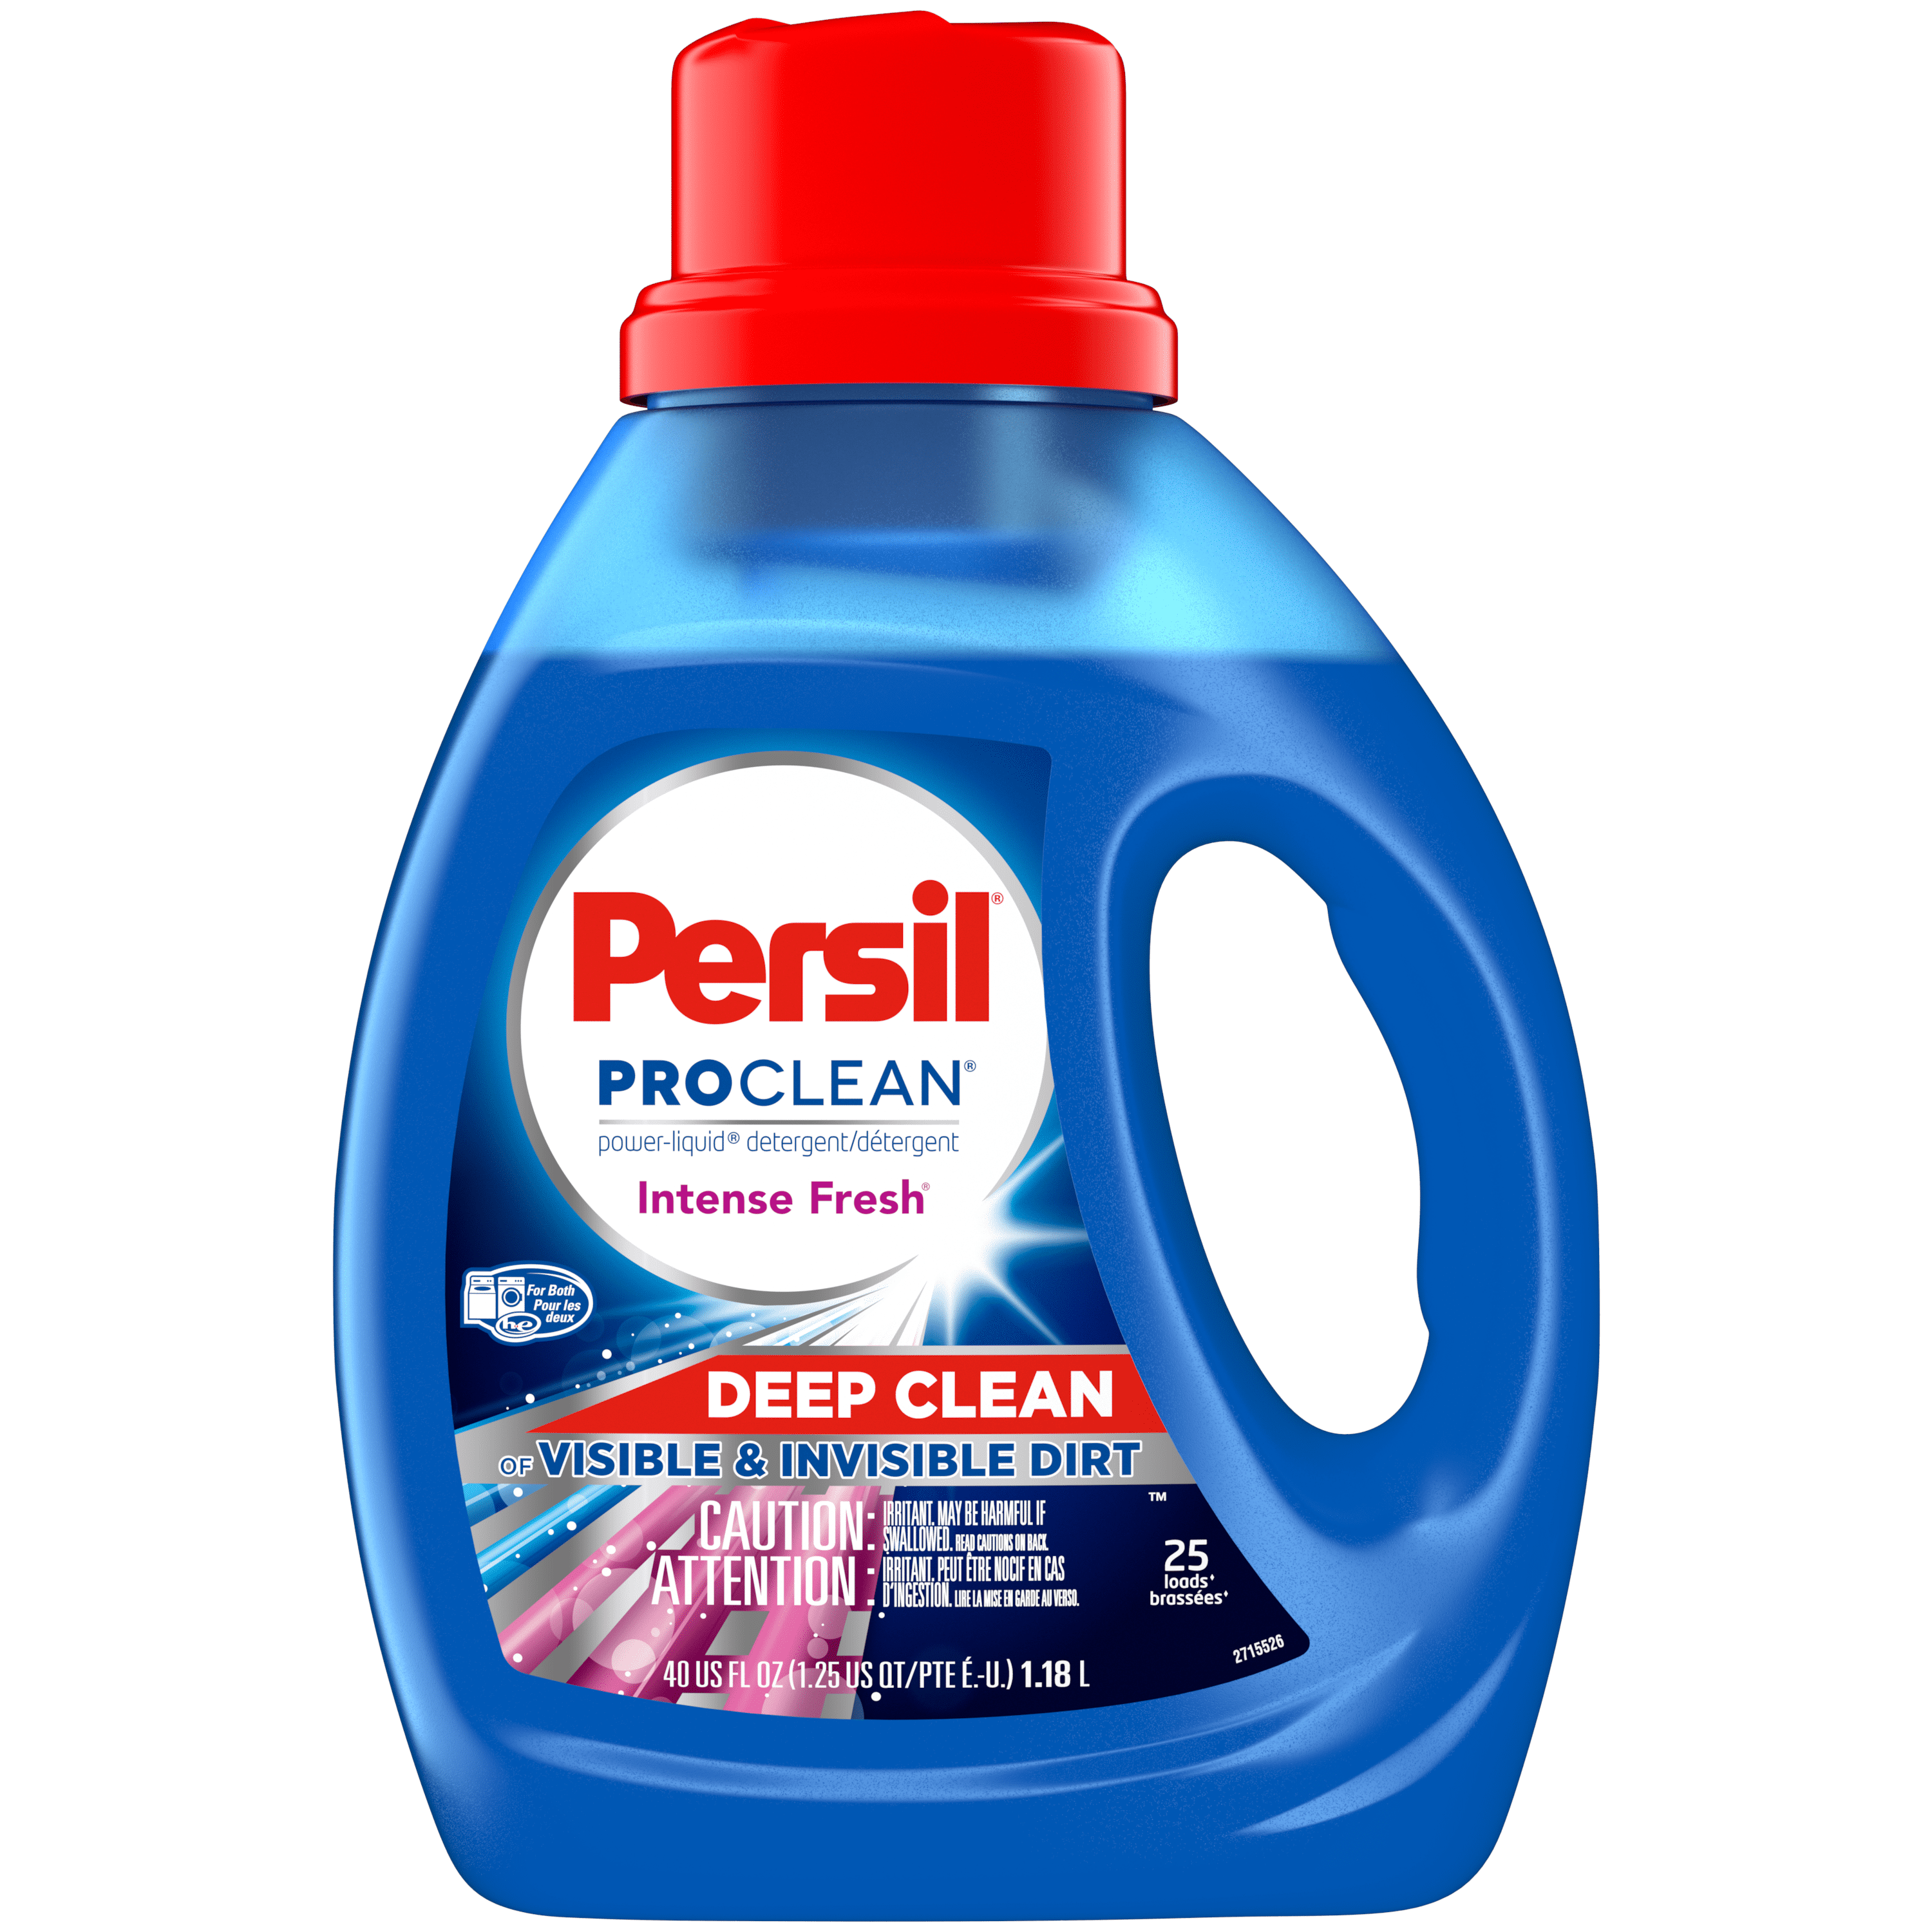 Persil PROCLEAN. Persil Laundry. Persil Deep clean logo. Persil PROCLEAN Turkish. Включи fresh and clean